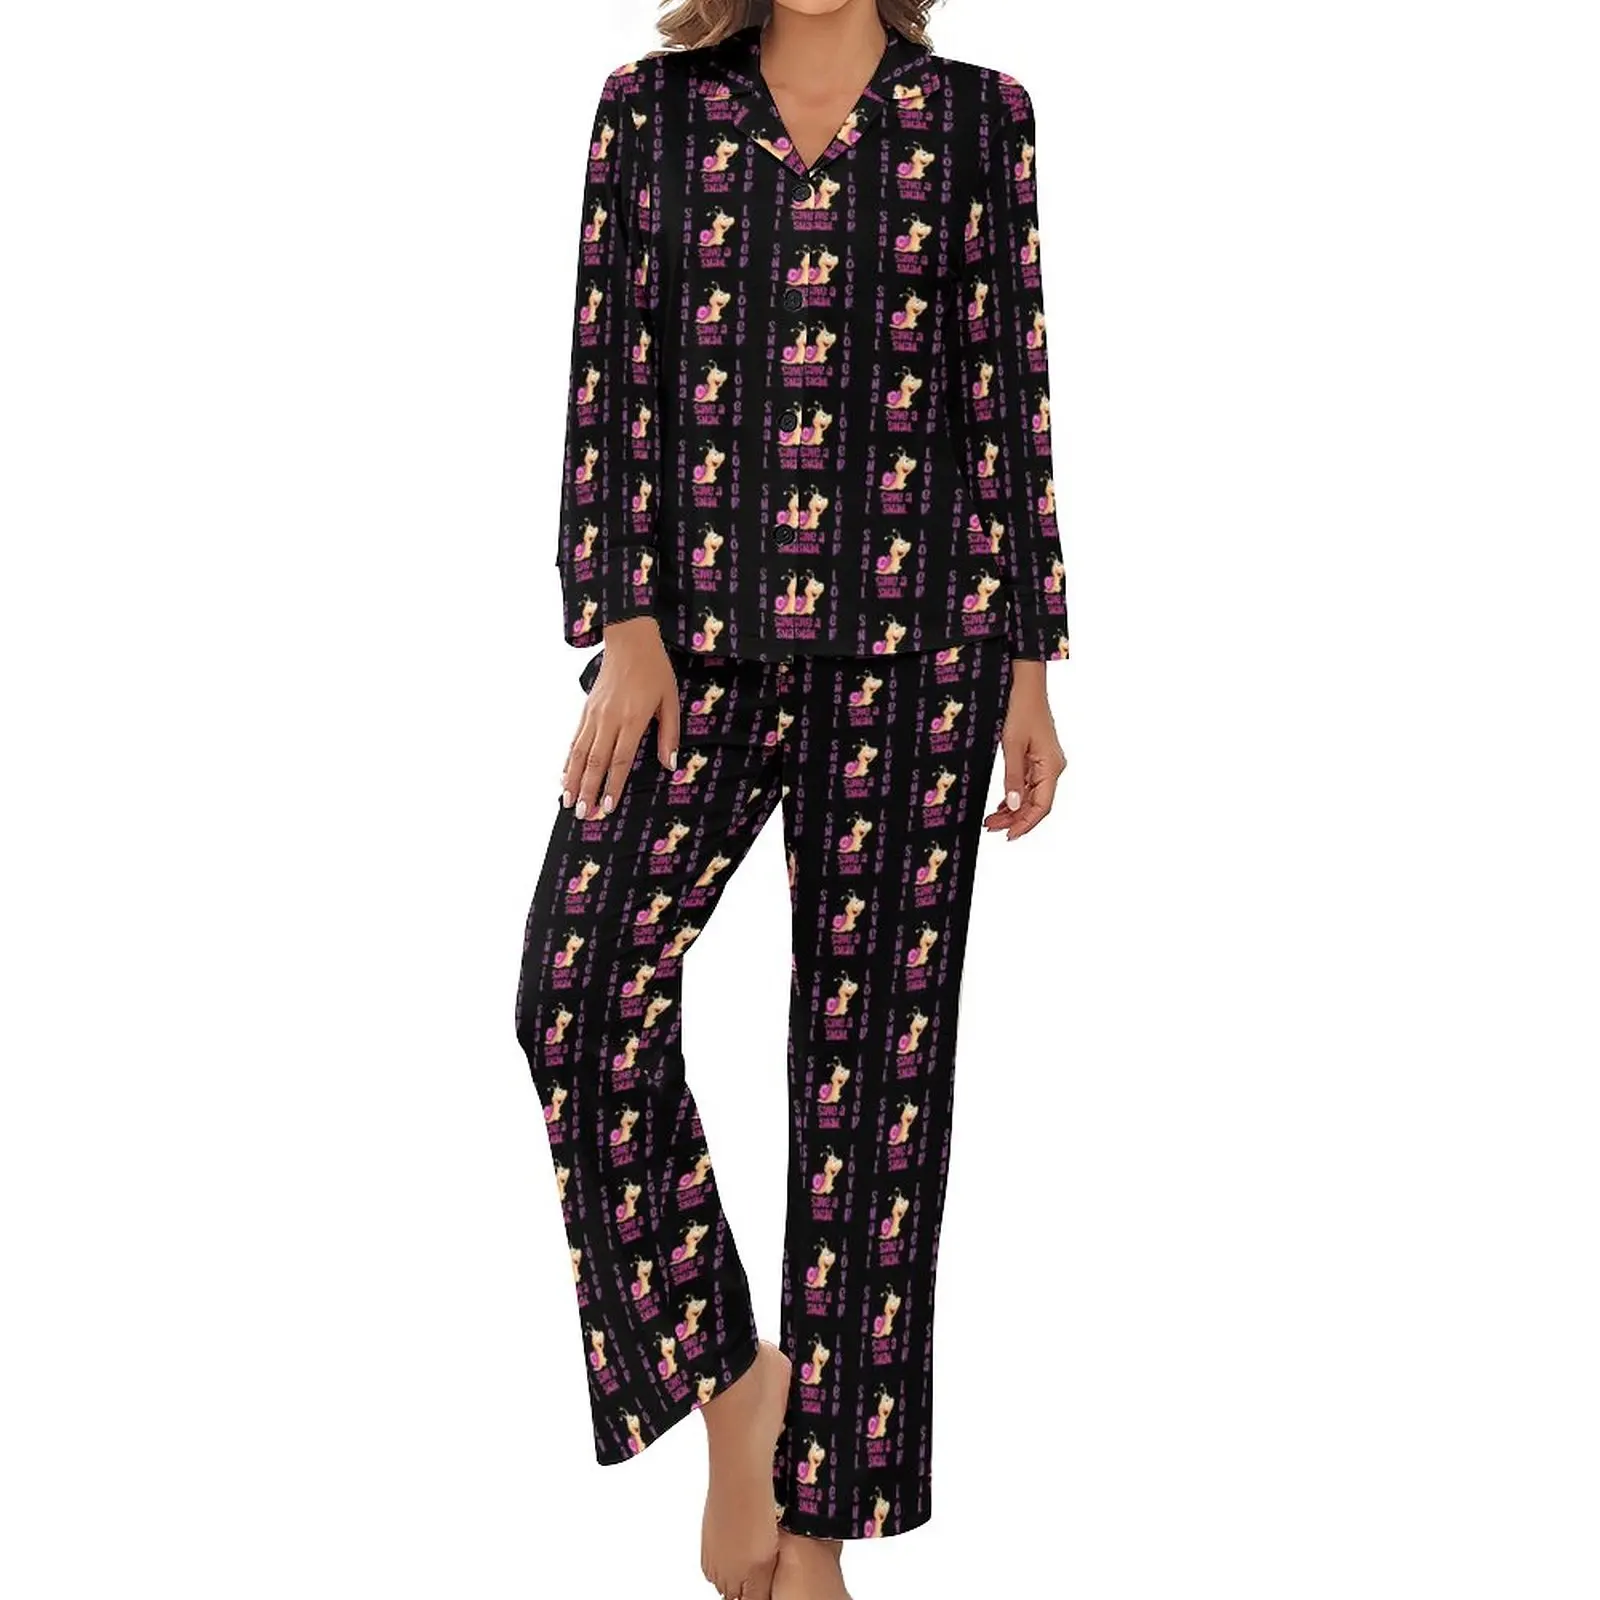 

Snail Lover Pajamas Cute Animal Print Long-Sleeve Soft Pajama Sets 2 Piece Home Autumn Graphic Nightwear Gift Idea